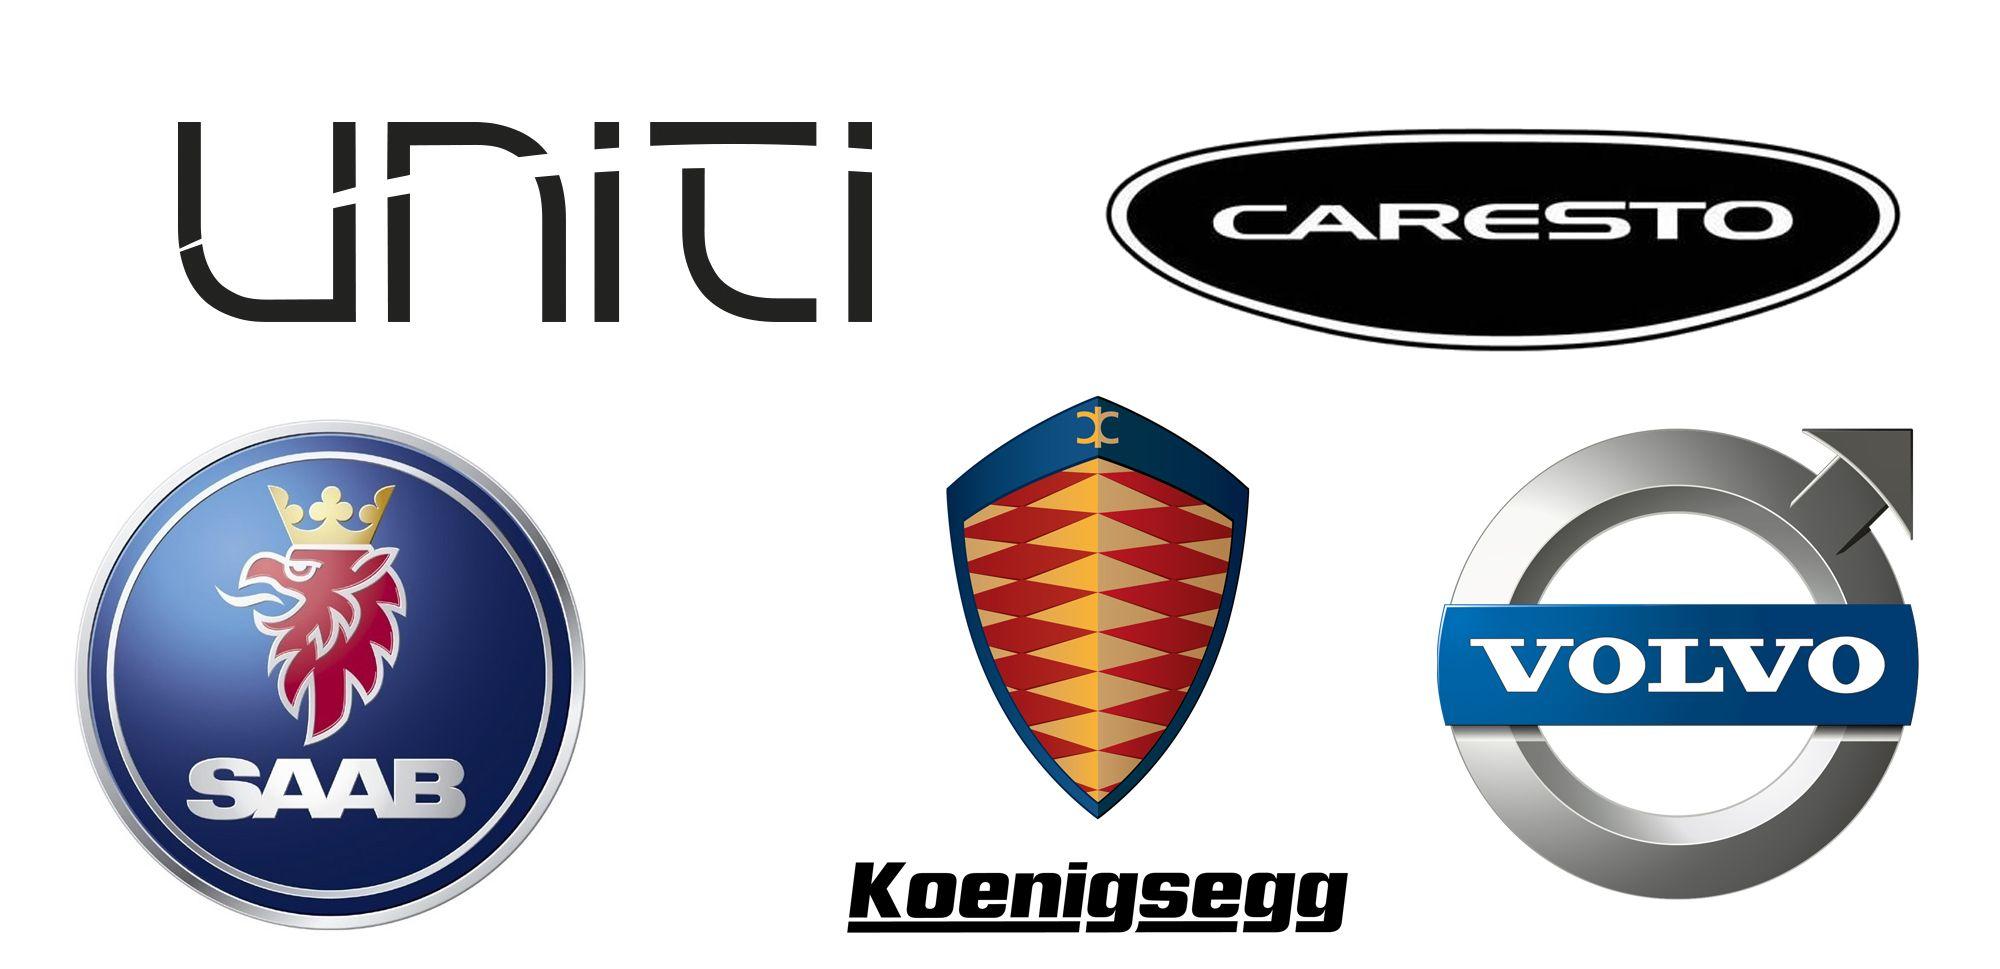 Swedish Car Logo - List of all Swedish Car Brands. World Cars Brands